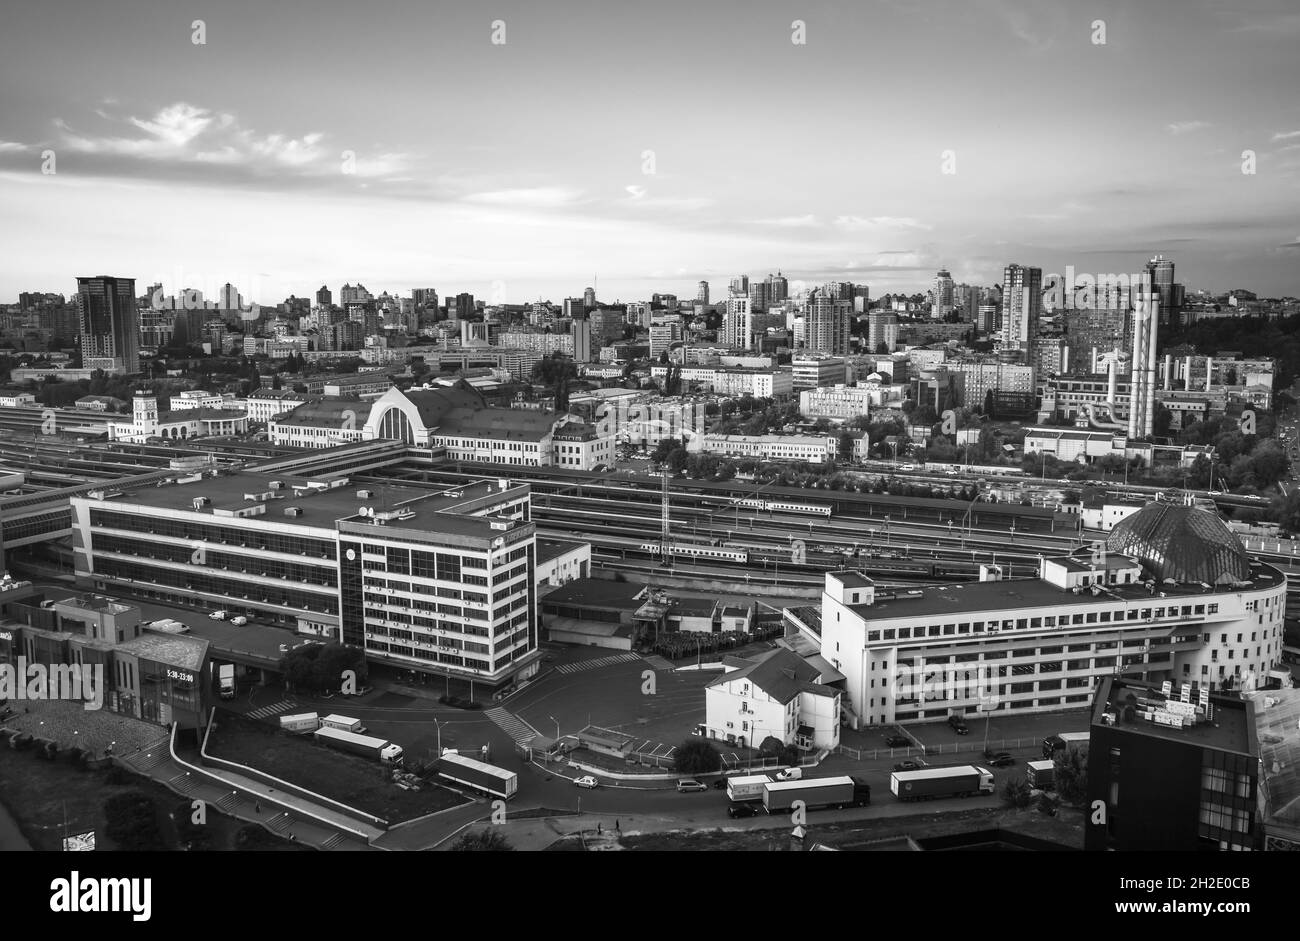 KYIV, UKRAINE - Aug. 25, 2021: Aerial view of Kyiv city skyline, Kyiv downtown cityscape, capital of Ukraine. Central Railway Station. Top view panora Stock Photo